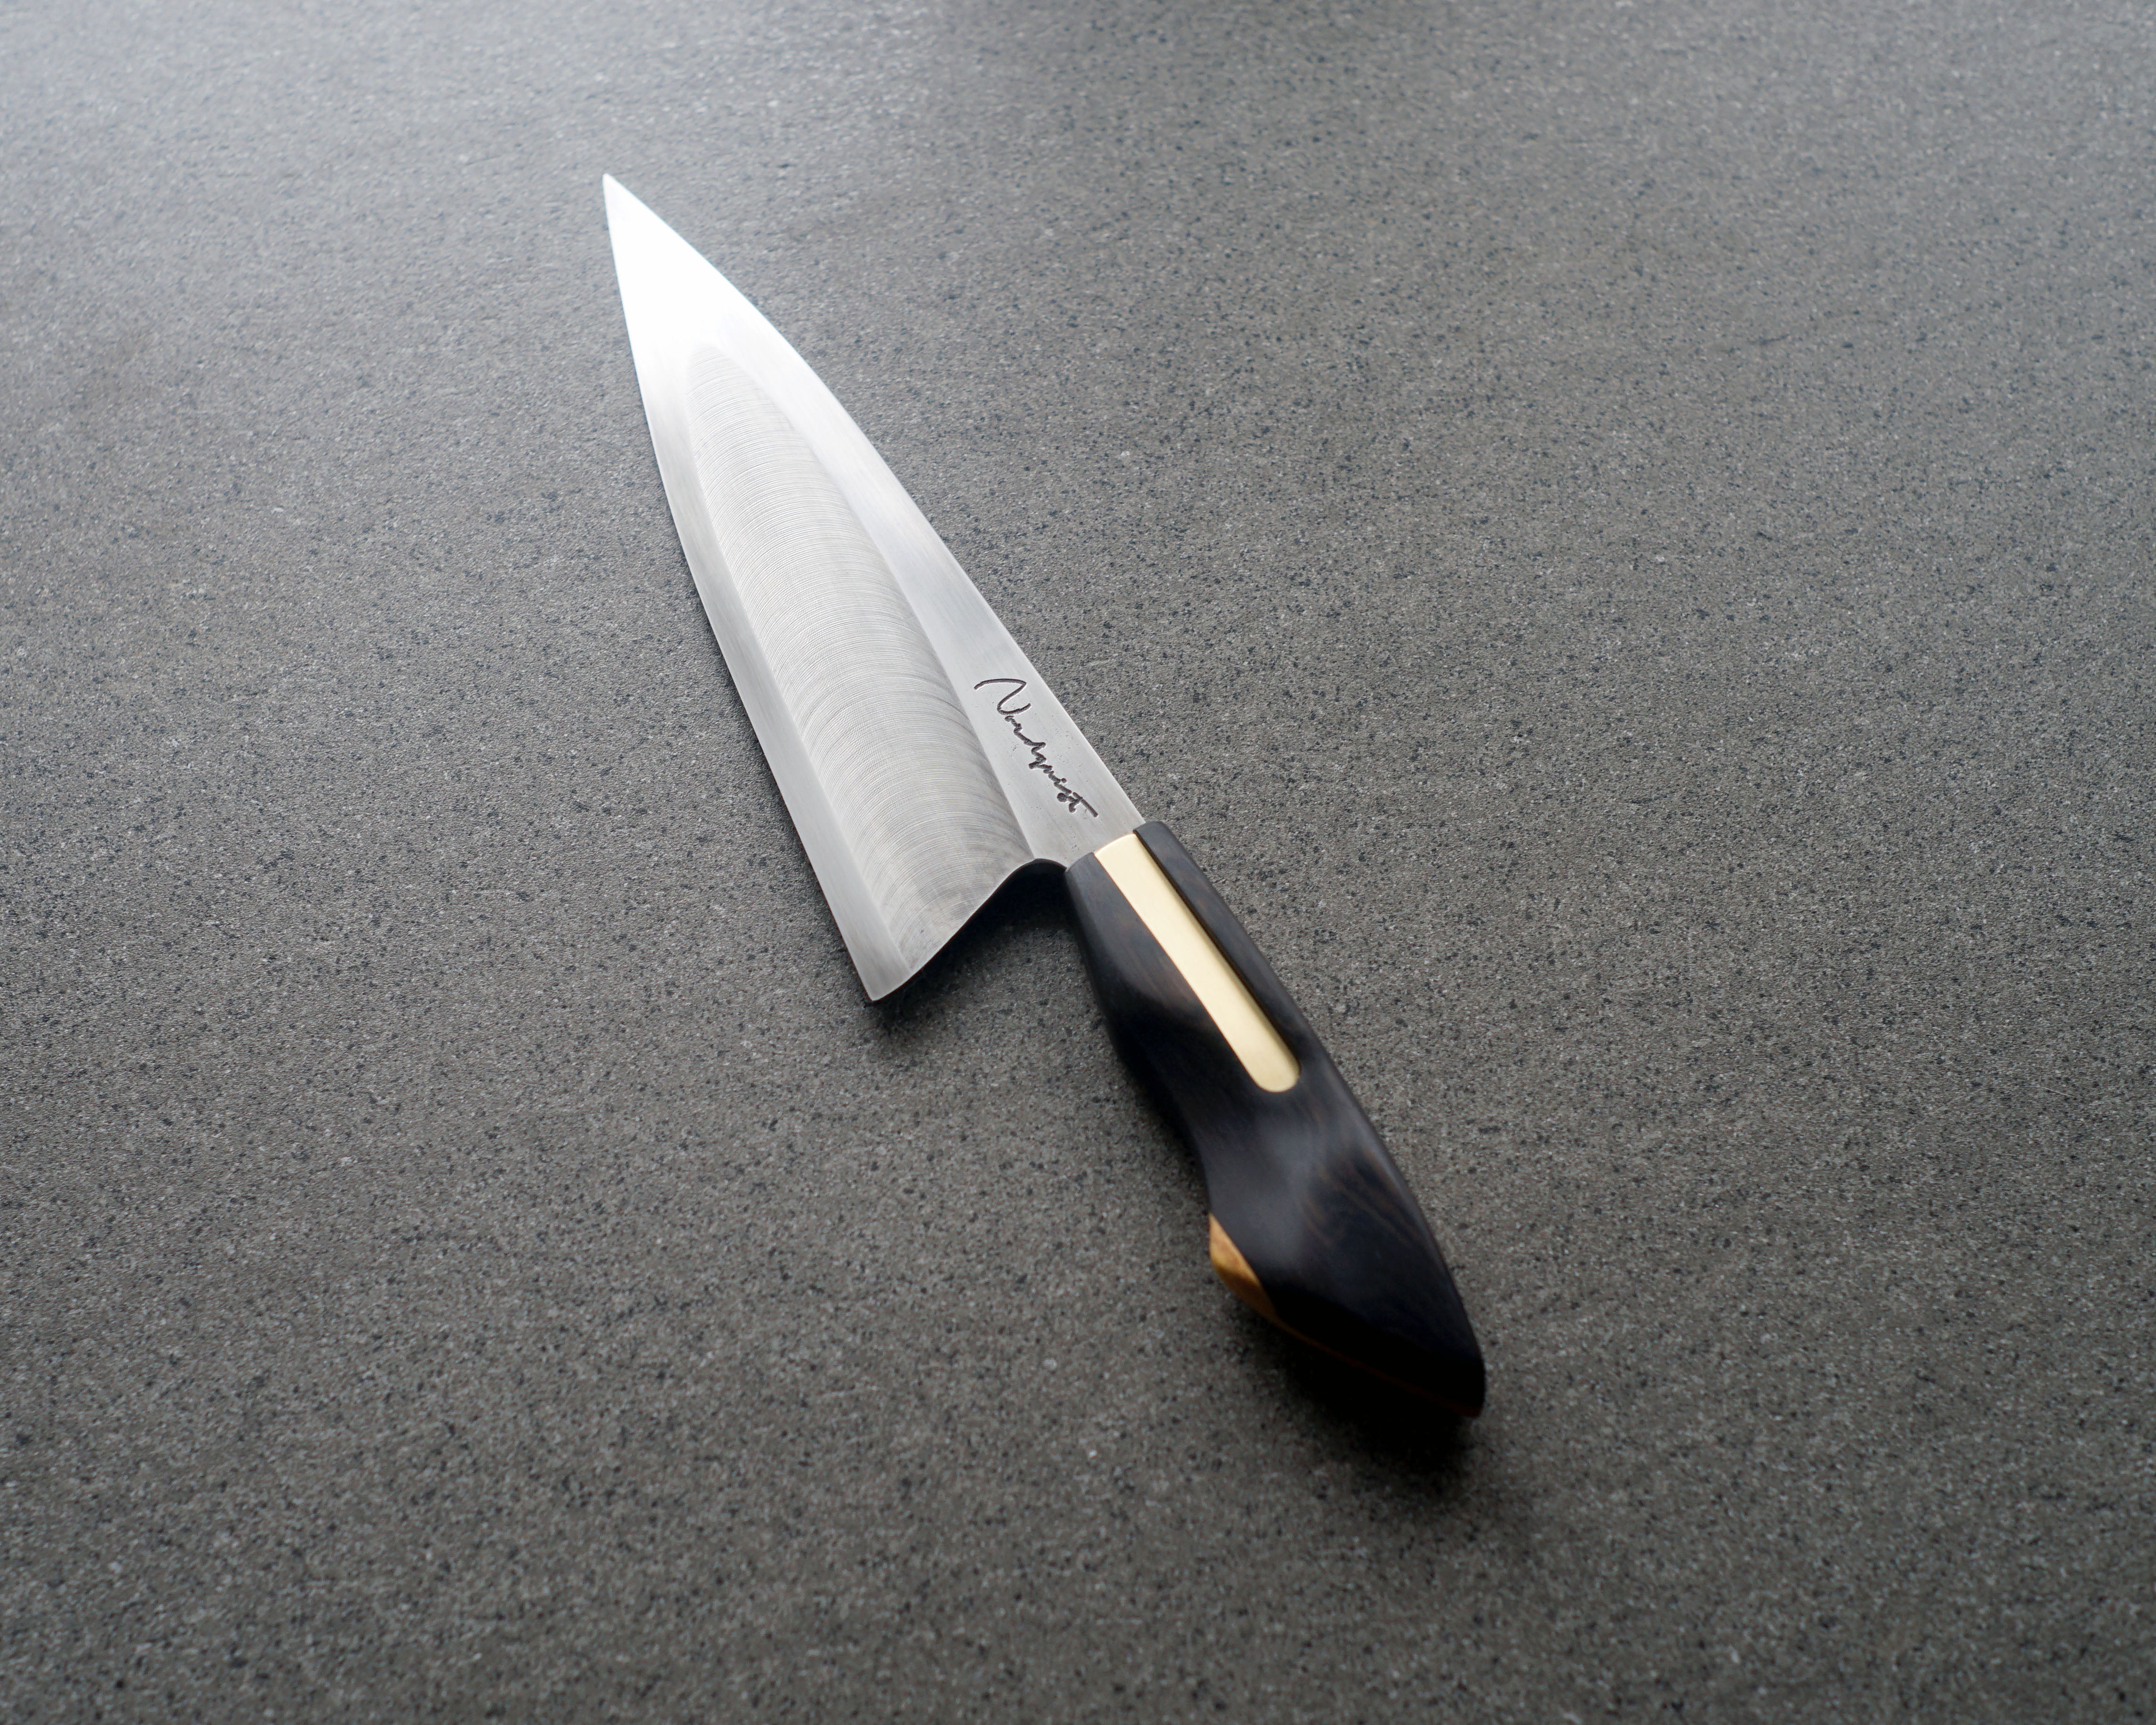 African Blackwood & Brass S-Grind Chef's Knife